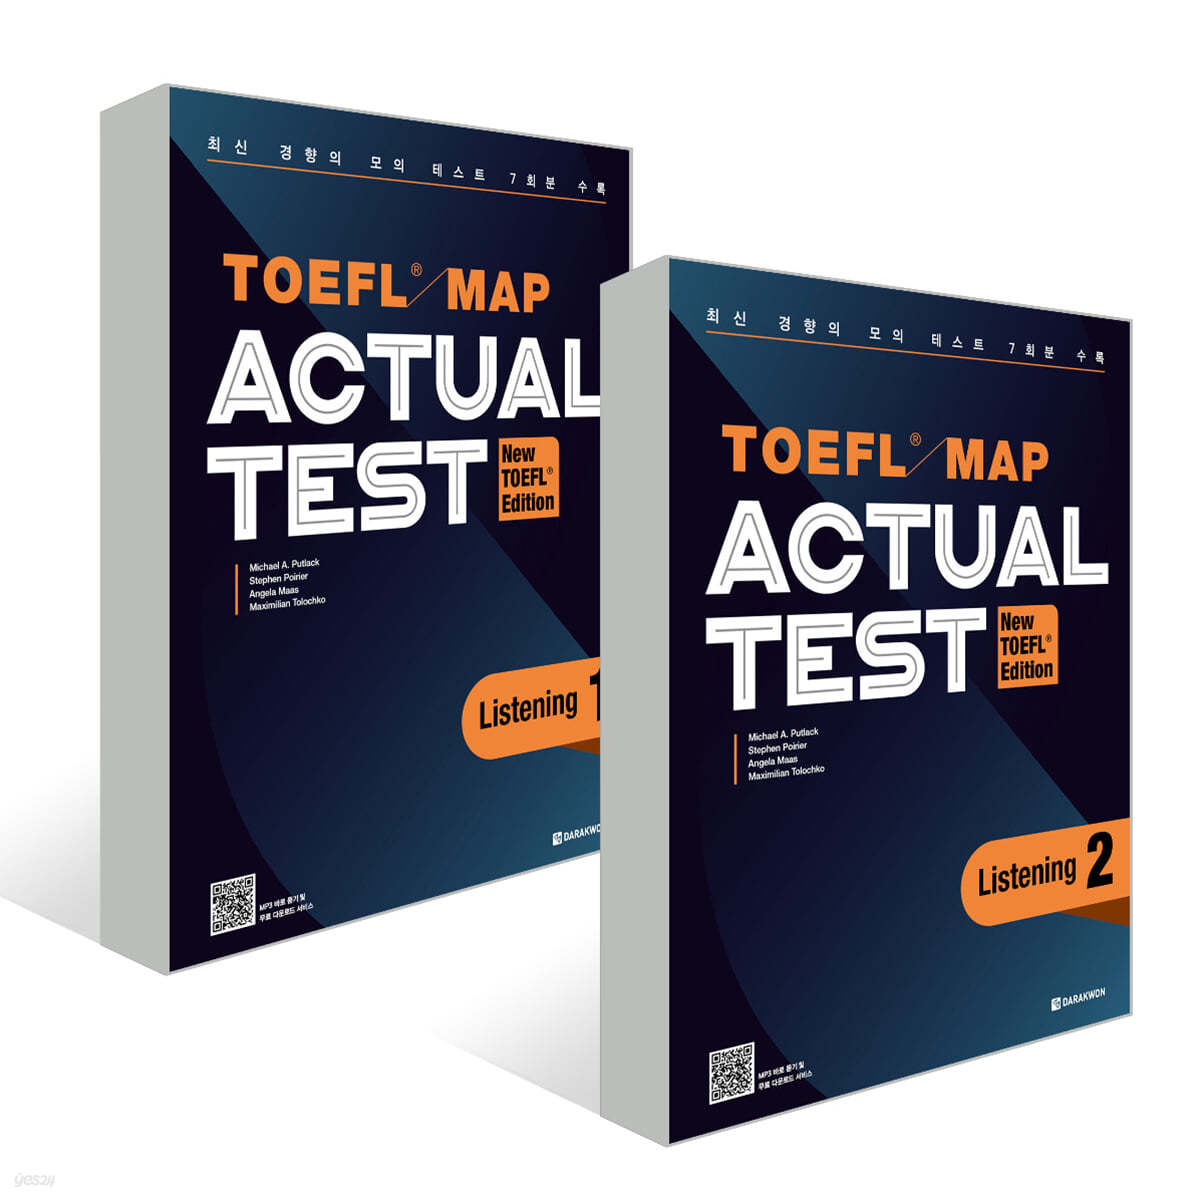 TOEFL MAP ACTUAL TEST Listening 1,2 권 세트